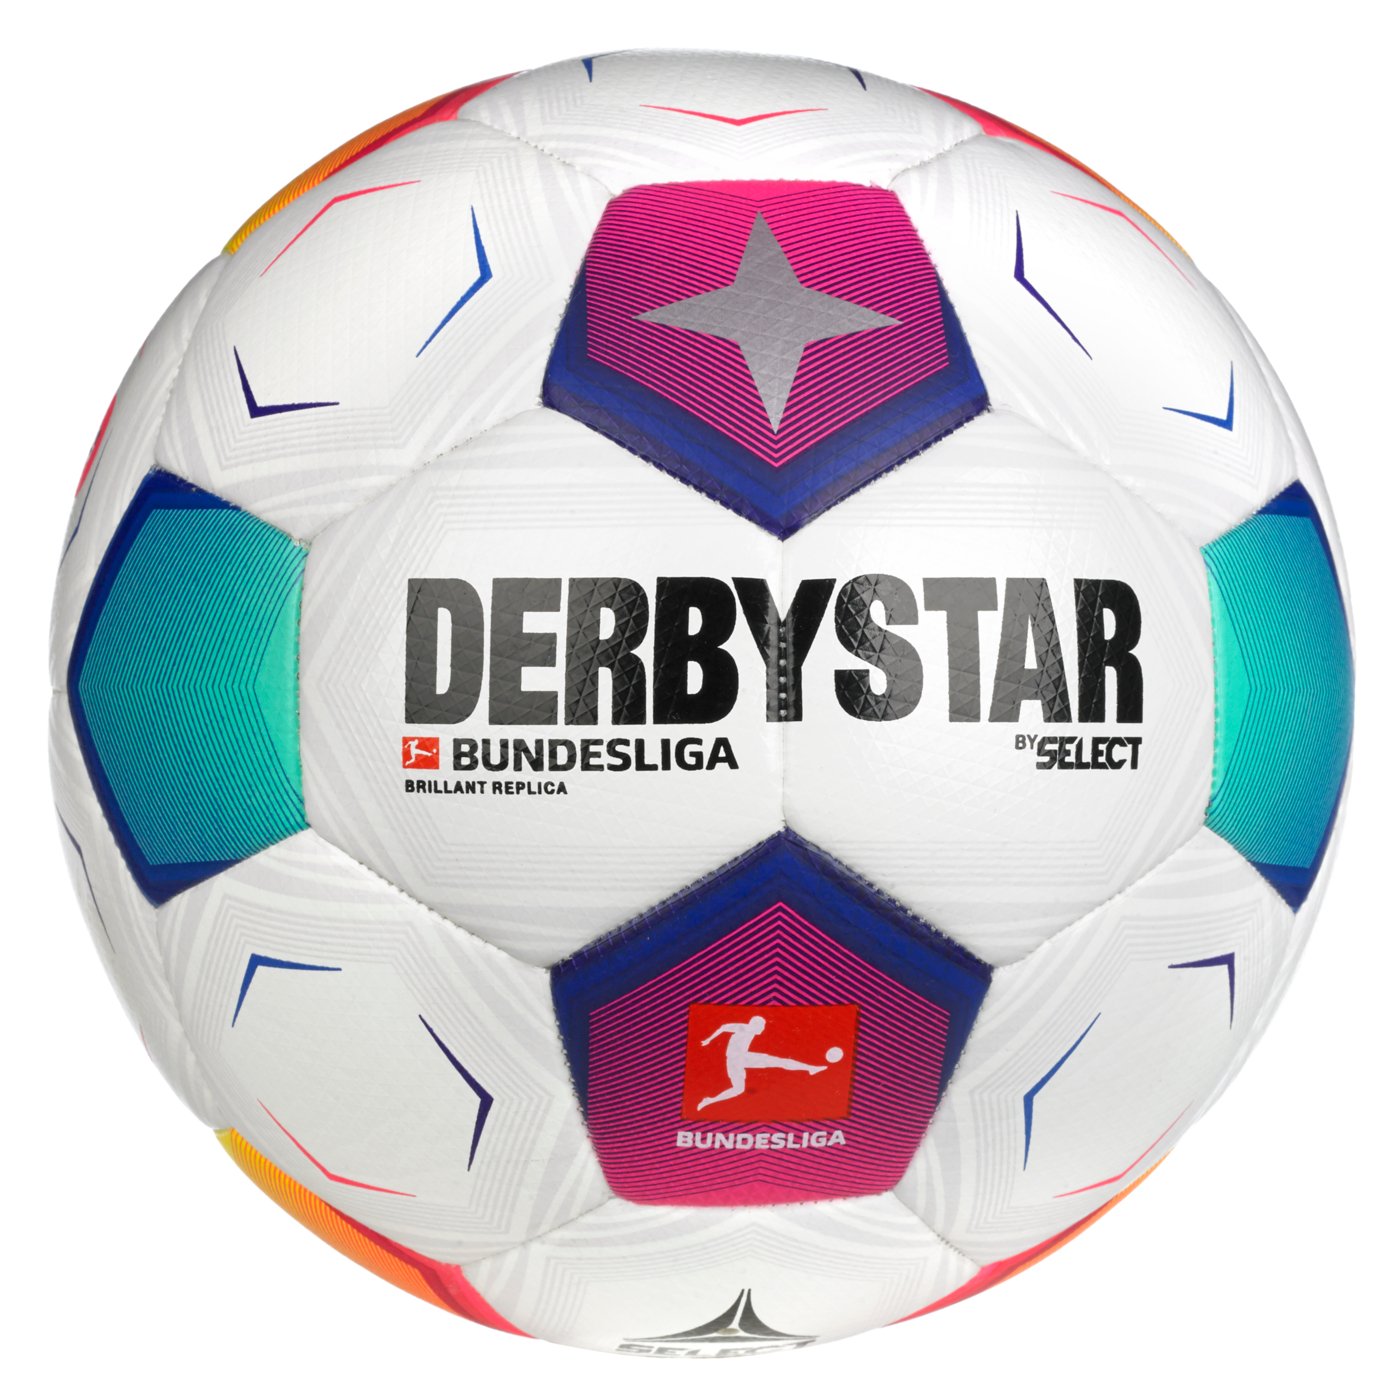 М'яч футбольний SELECT DERBYSTAR Bundesliga Brillant Replica v23 (672) біло/син/фіолет, 5, 5